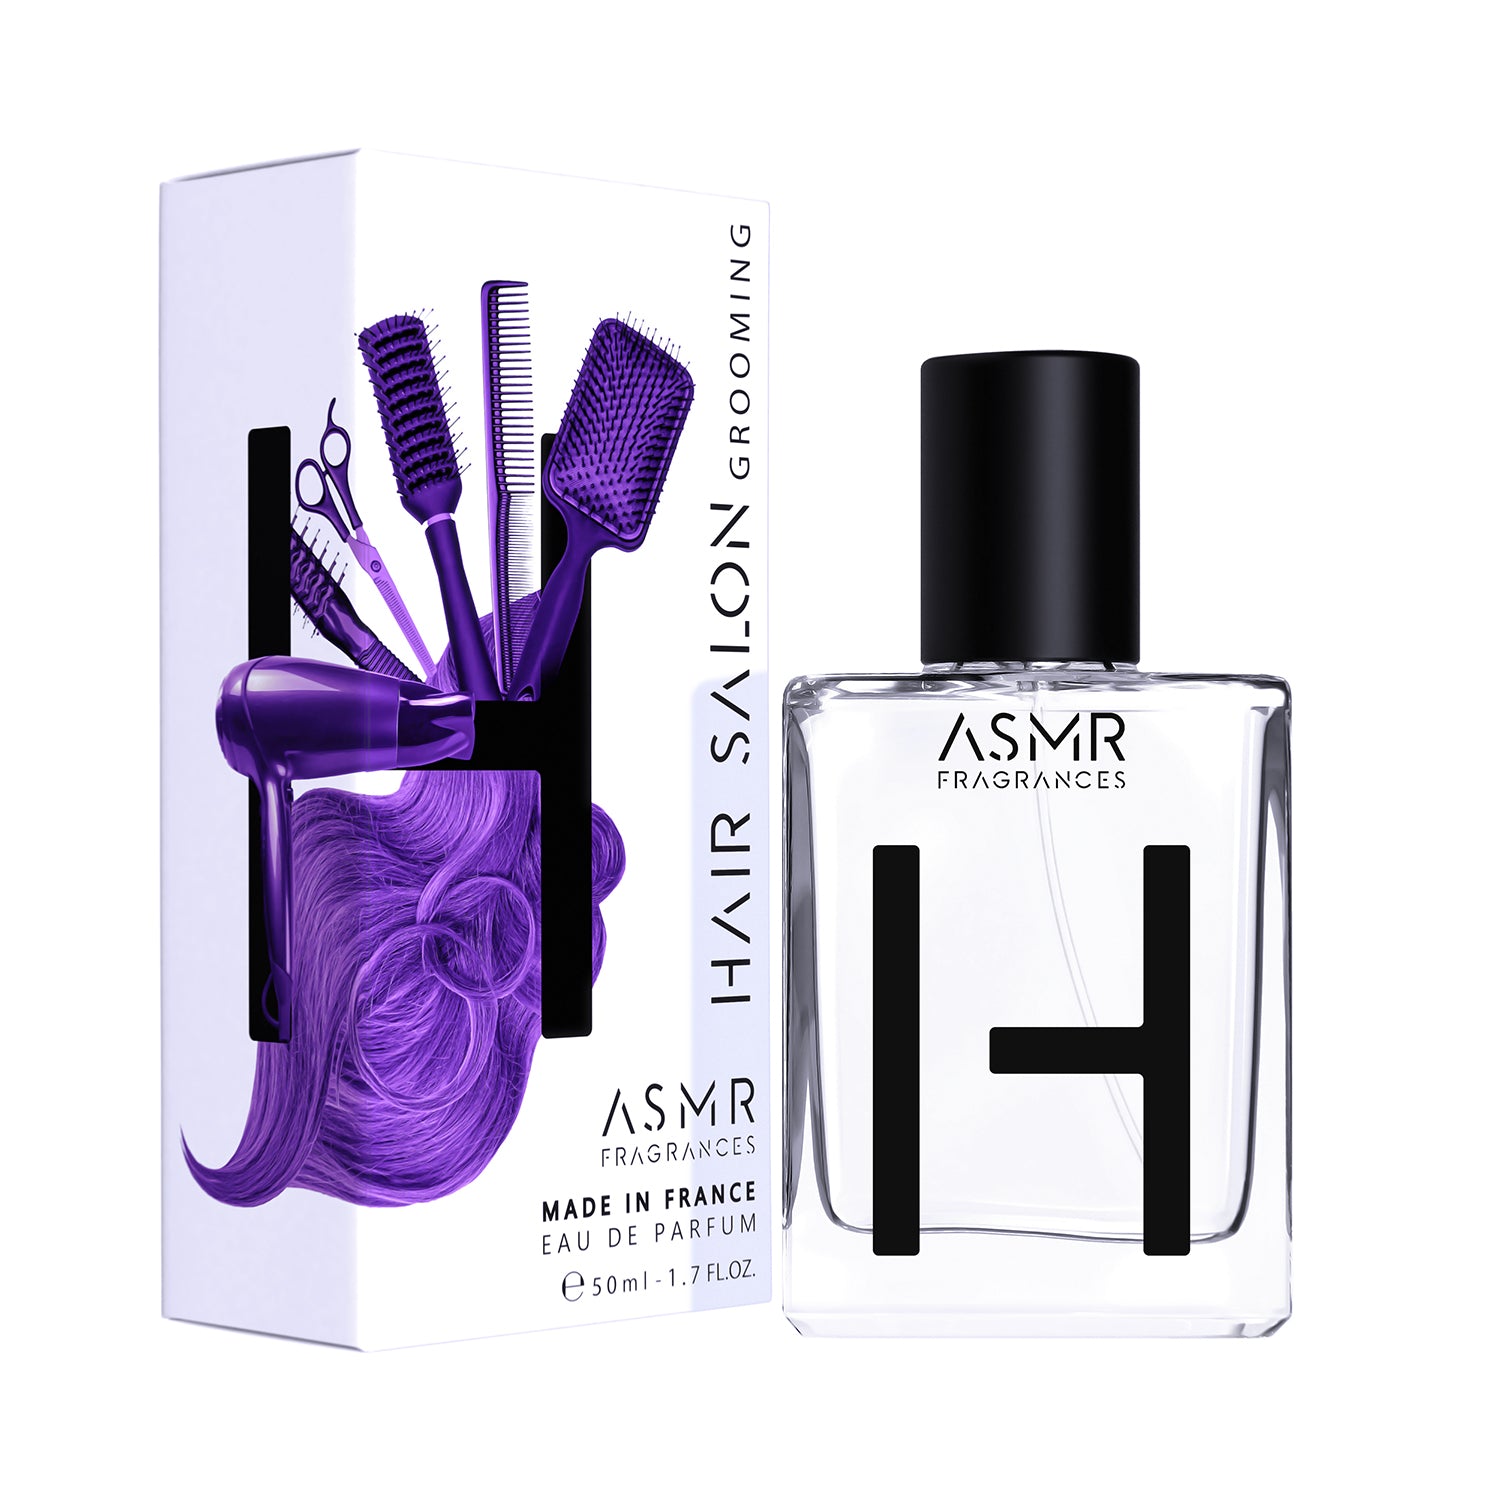 ASMR Fragrances | Hair Salon Grooming embouteillage